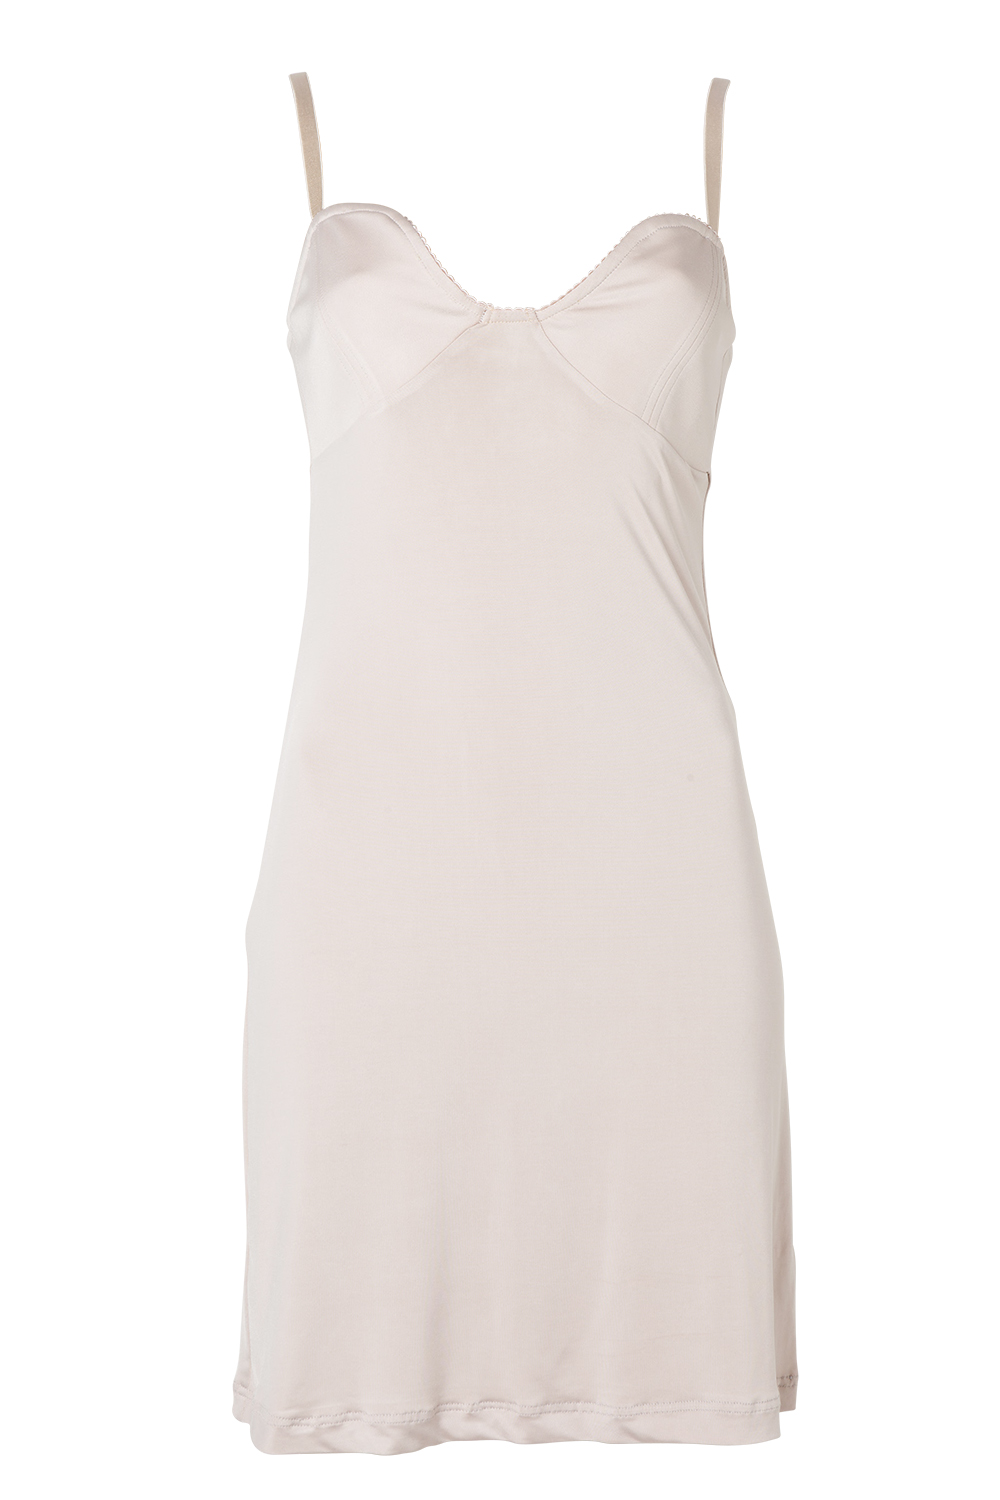 Dress, $166, by Ingrid Starnes.